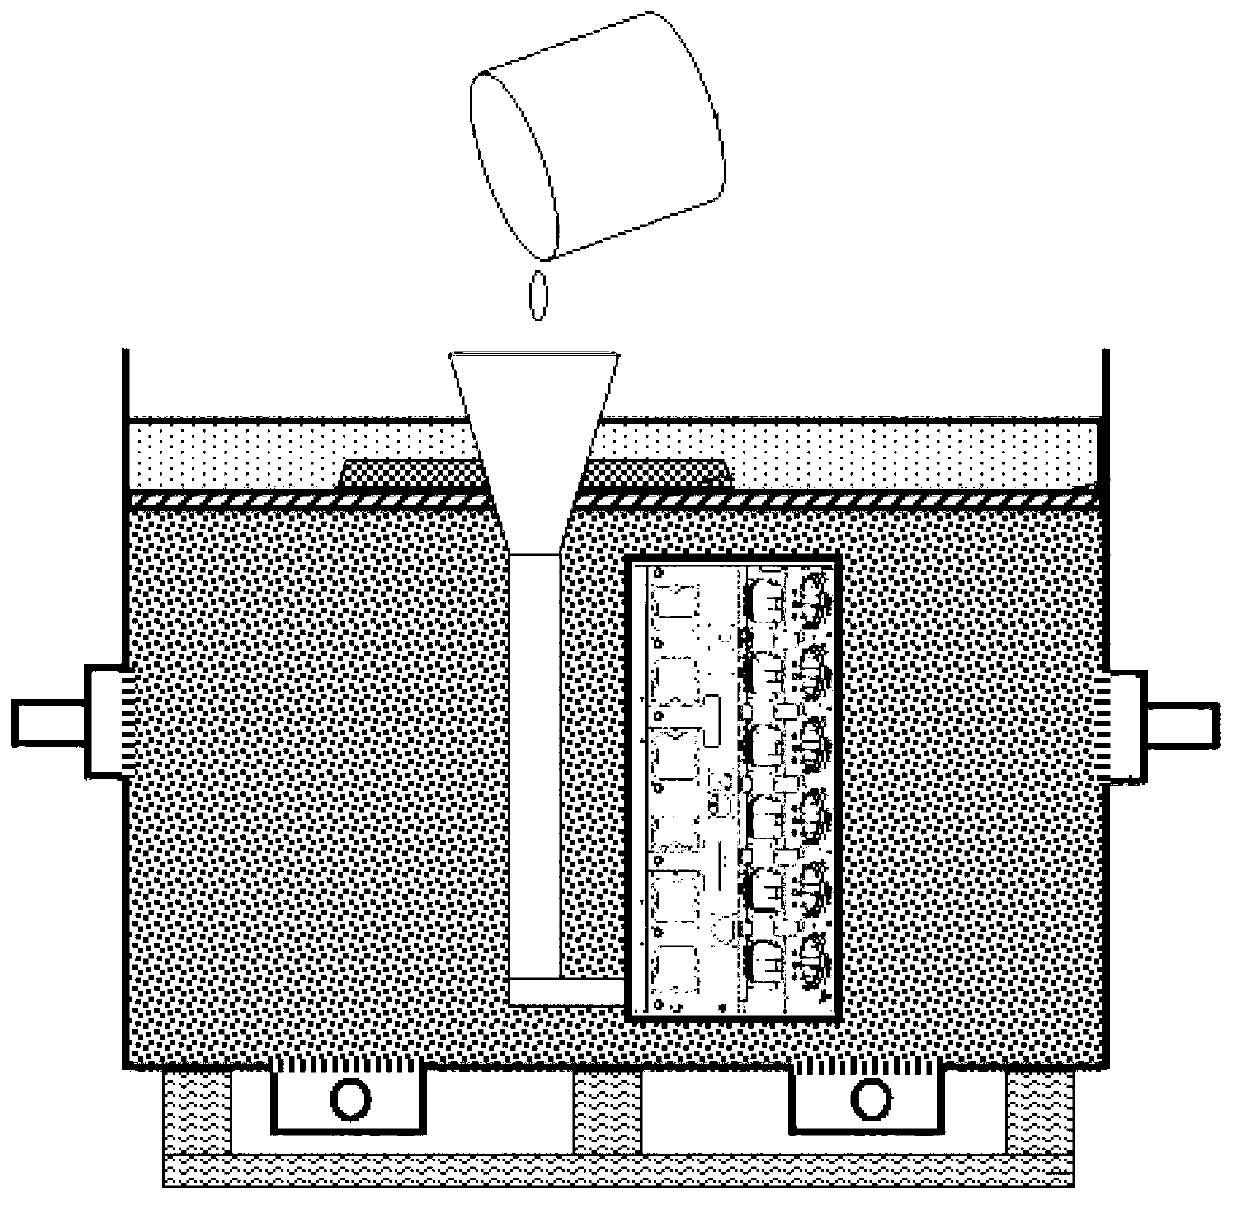 Casting technique of V12-type engine cylinder block